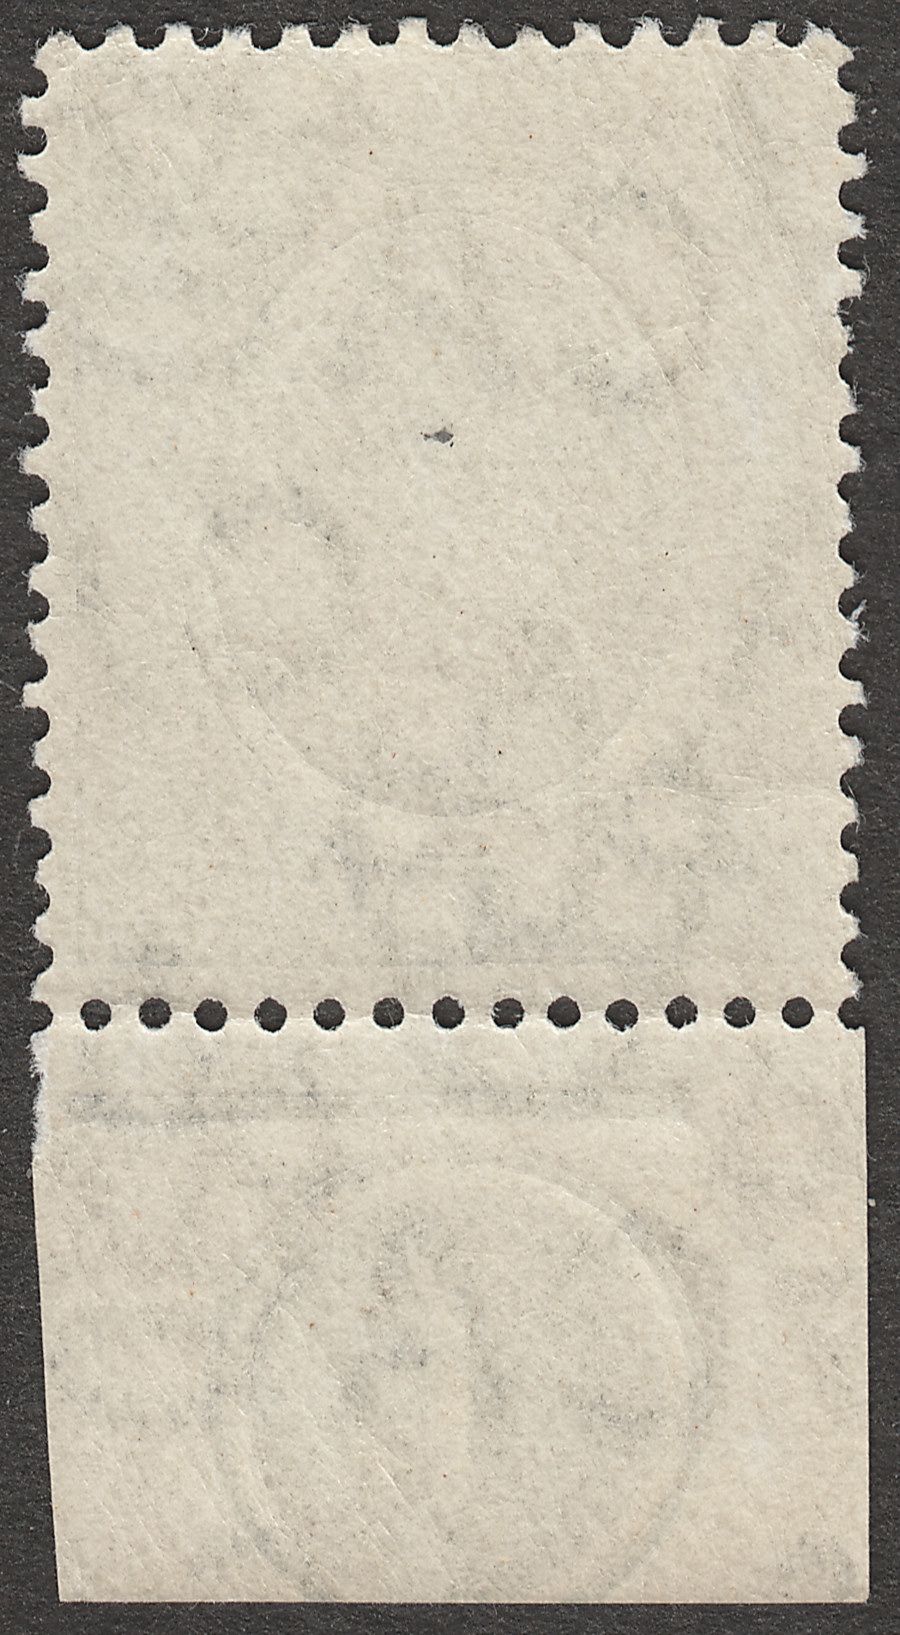 Jamaica 1911 KEVII 2d Grey Mint SG57